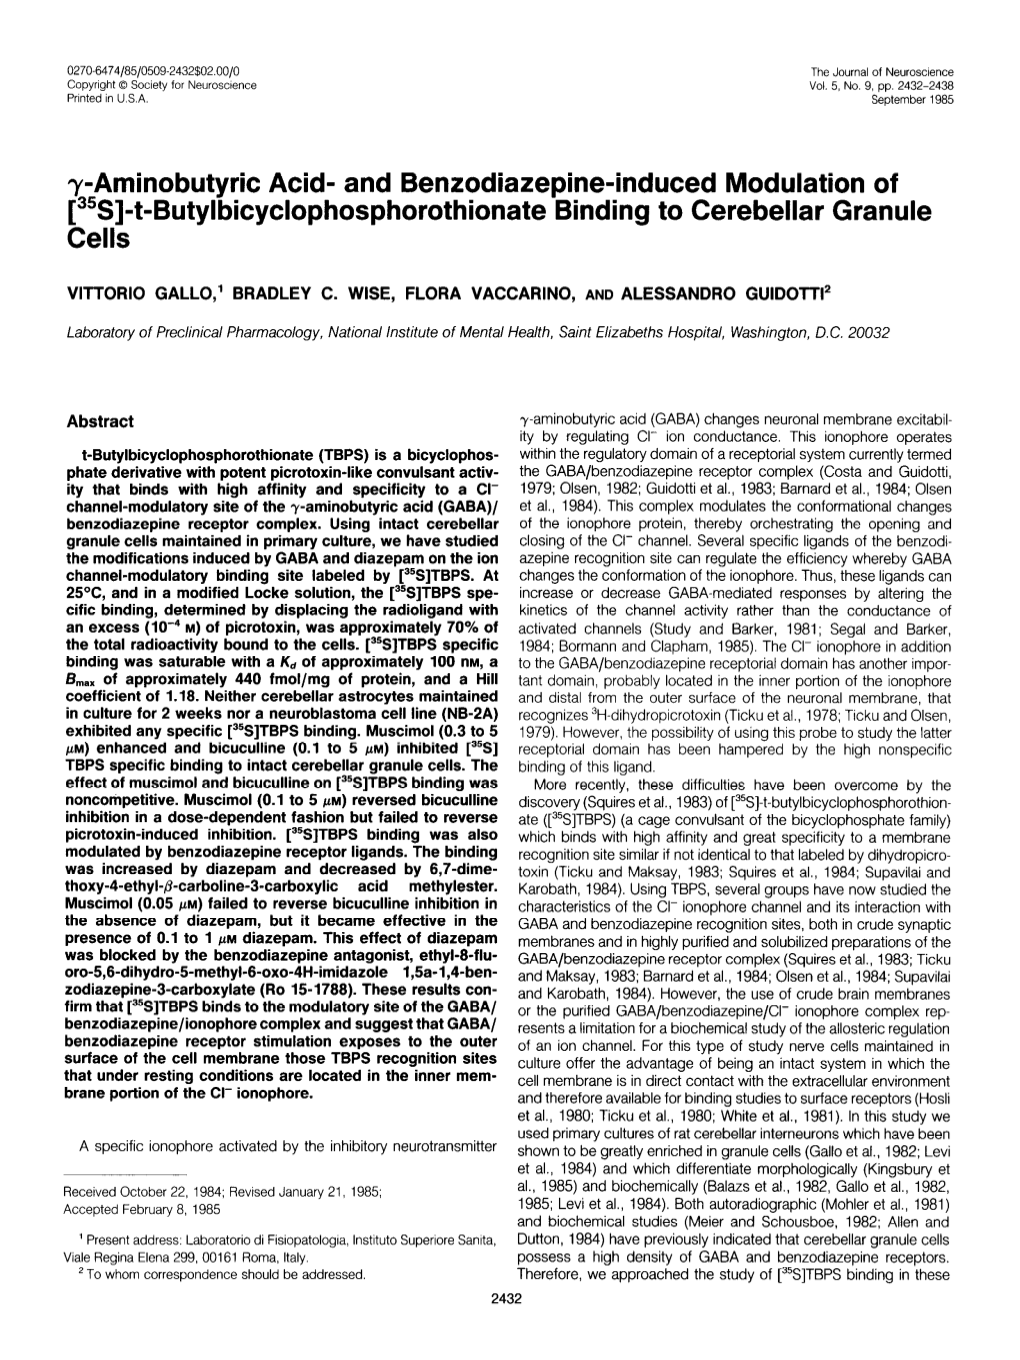 [35S]-T-Butylbicyclophosphorothionate Binding to Cerebellar Granule Cells